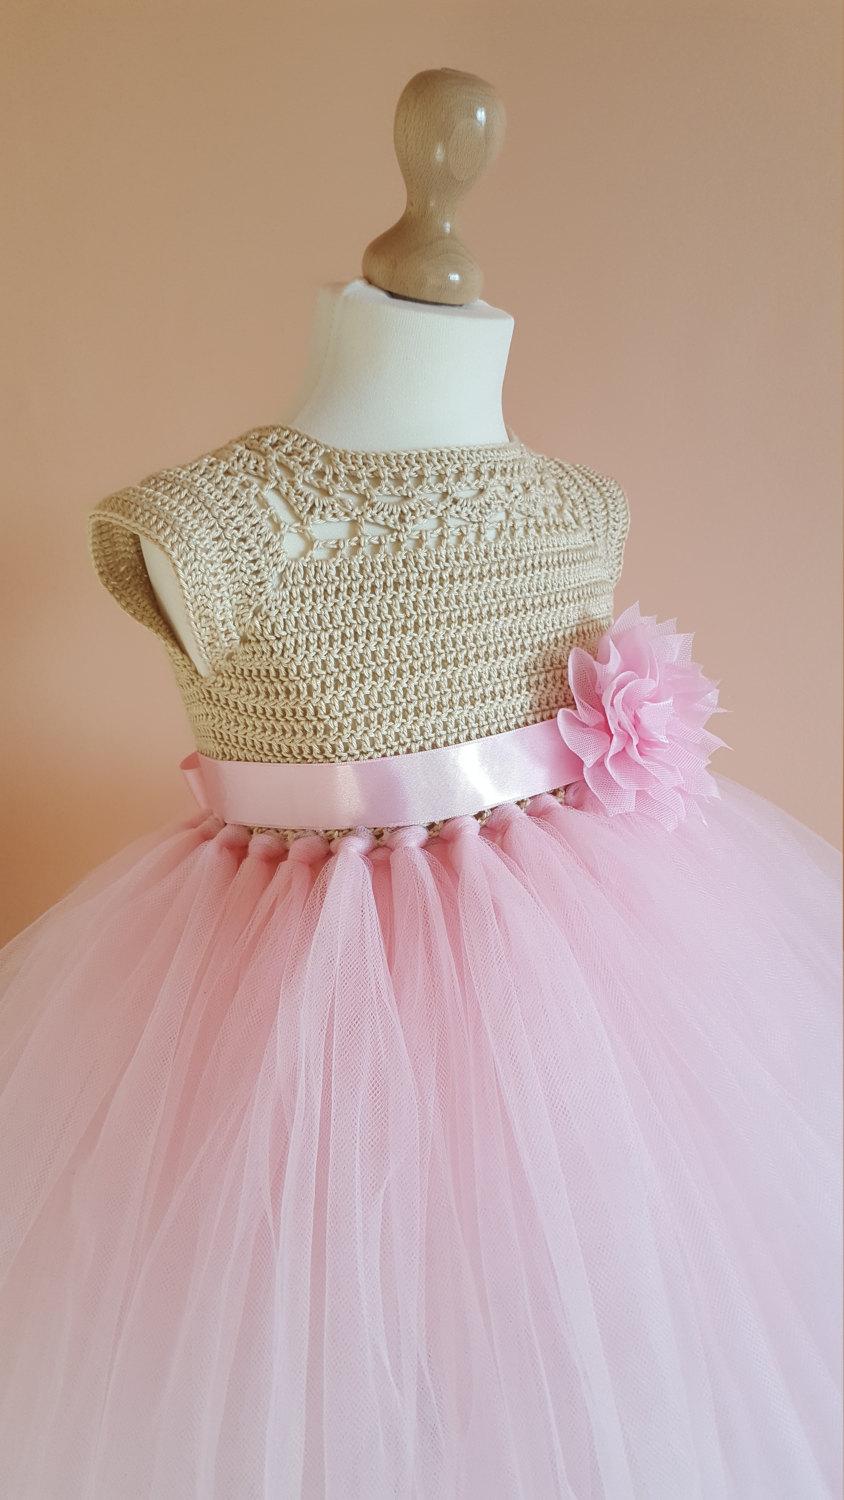 زفاف - tutu dress, crochet dress, crochet yoke, princess dress, bridesmaid dress,gold dress, baby dress, toddler dress, baptism dress, flower girl